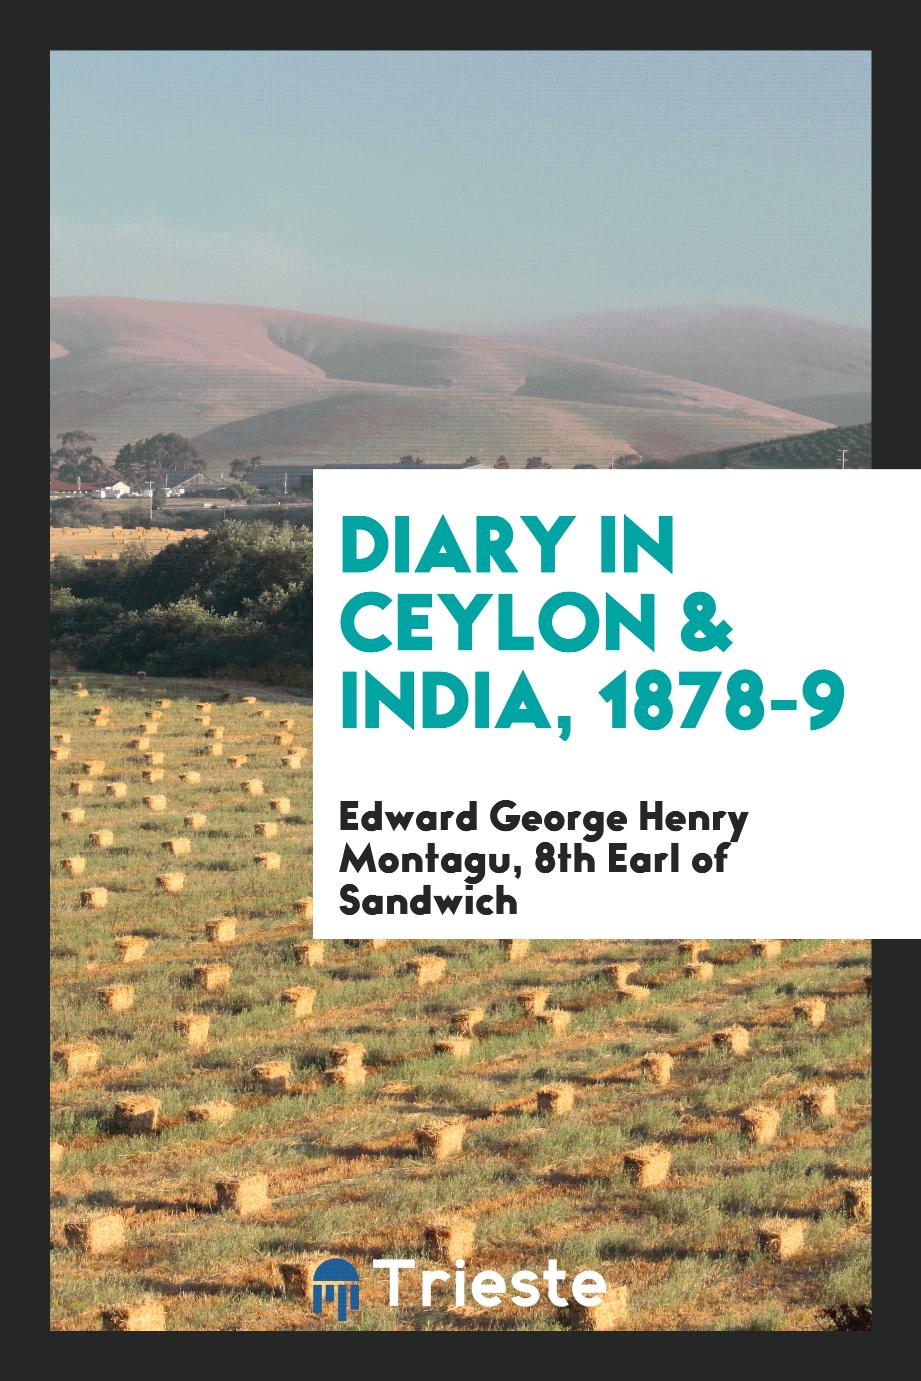 Edward George Henry  8th Earl of Sandwich Montagu - Diary in Ceylon & India, 1878-9